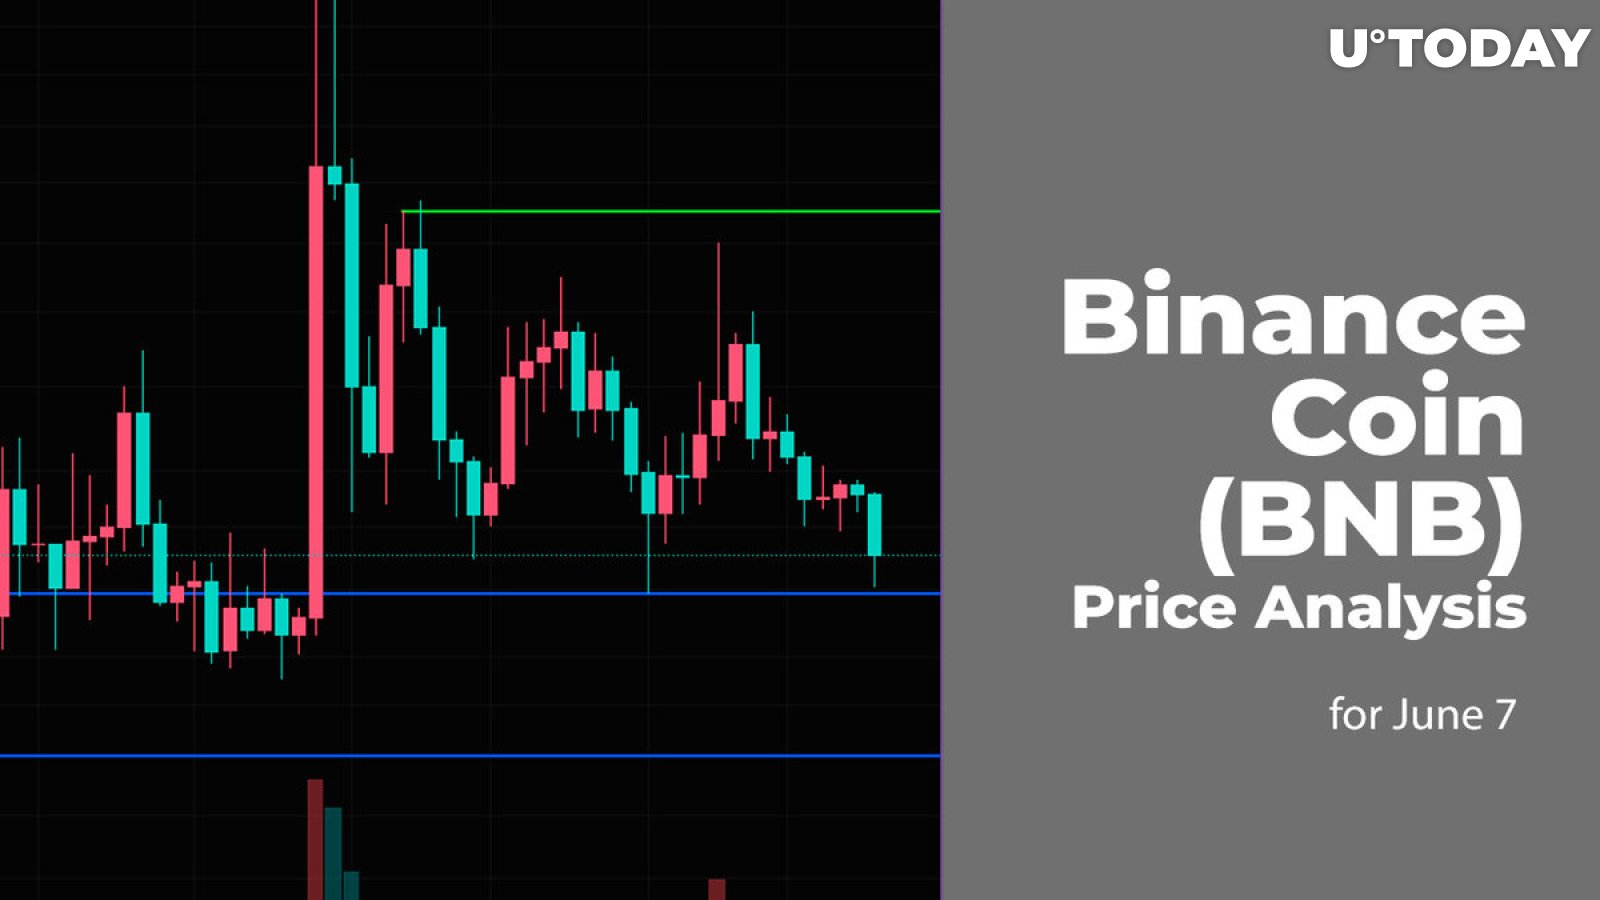 Binance Coin (BNB) Price Analysis for June 7